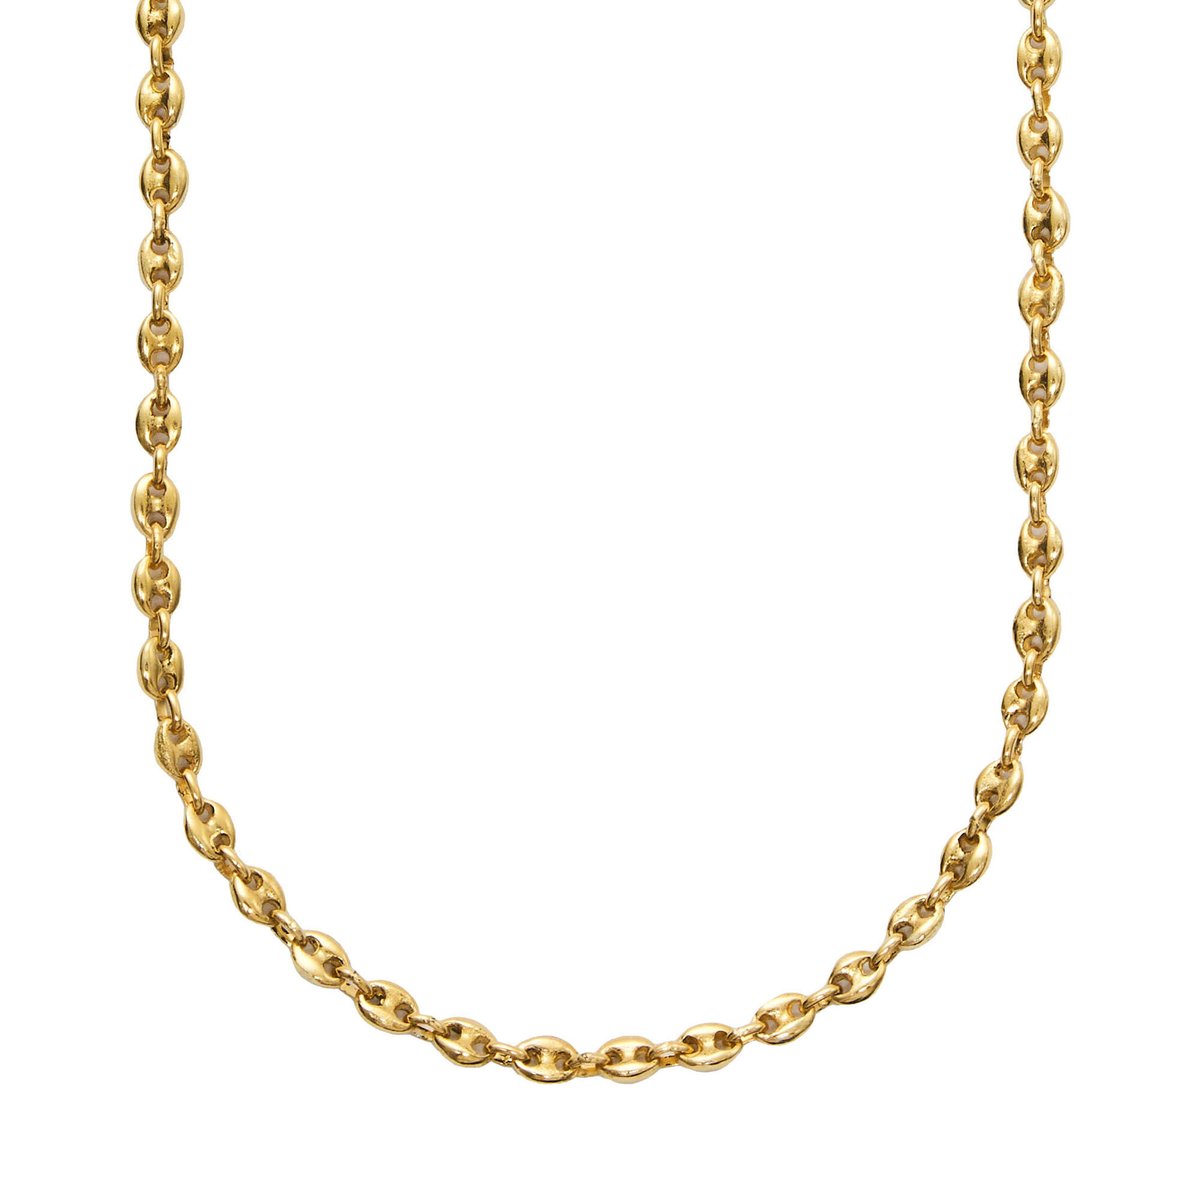 anker chain necklace GD | quip queint official ...